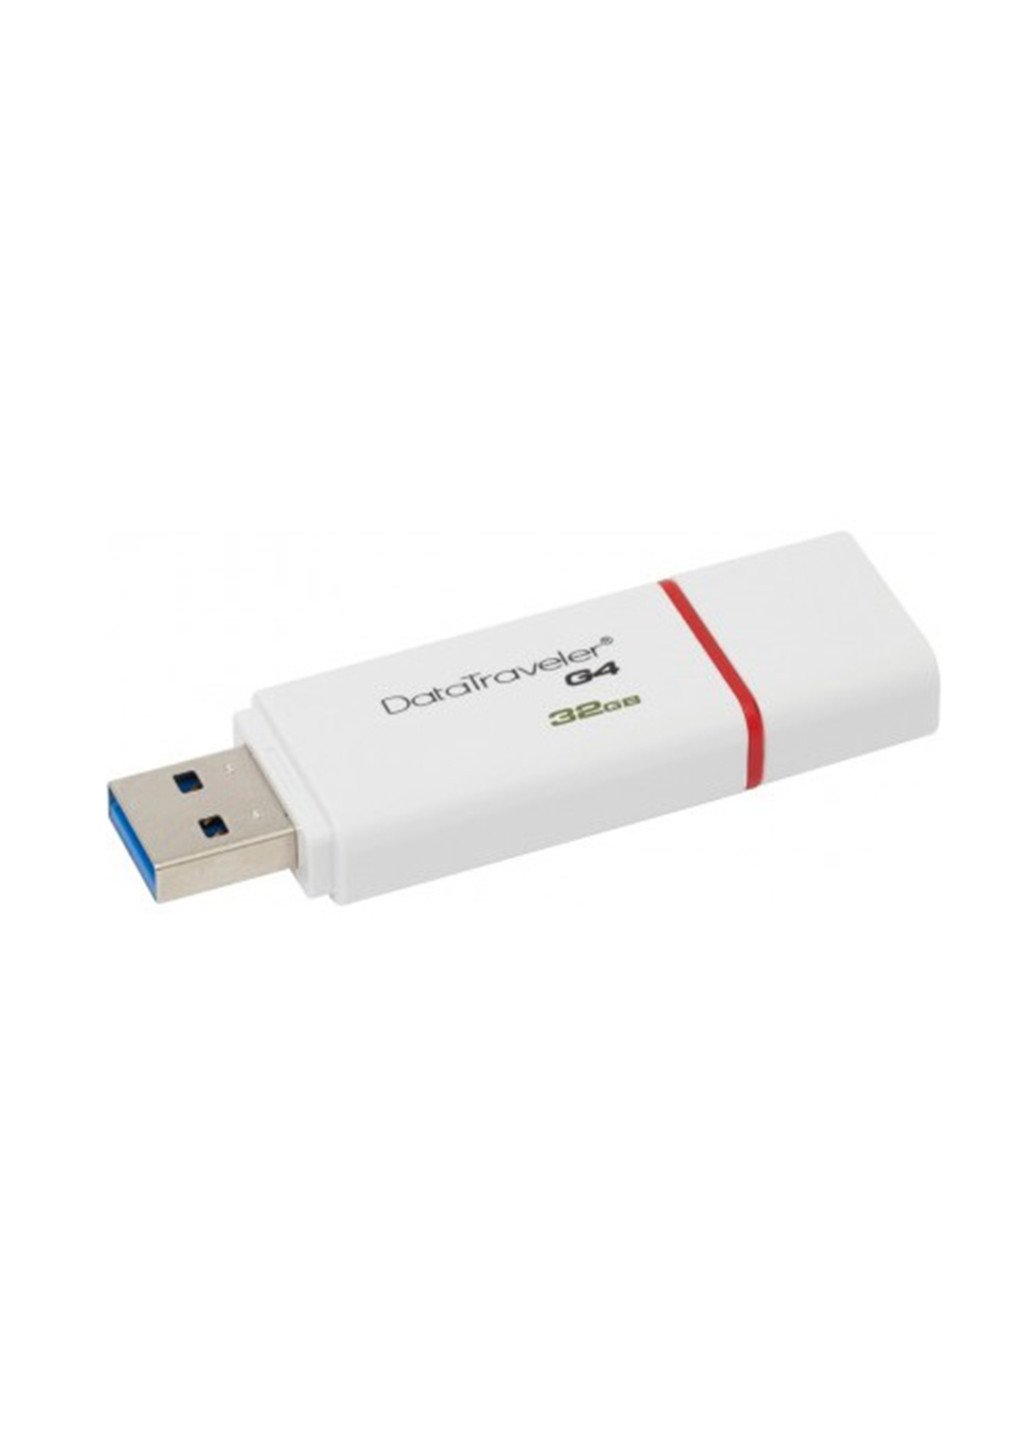 Флеш память USB DataTraveler I G4 32GB (DTIG4/32GB) Kingston флеш память usb kingston datatraveler i g4 32gb (dtig4/32gb) (135165439)